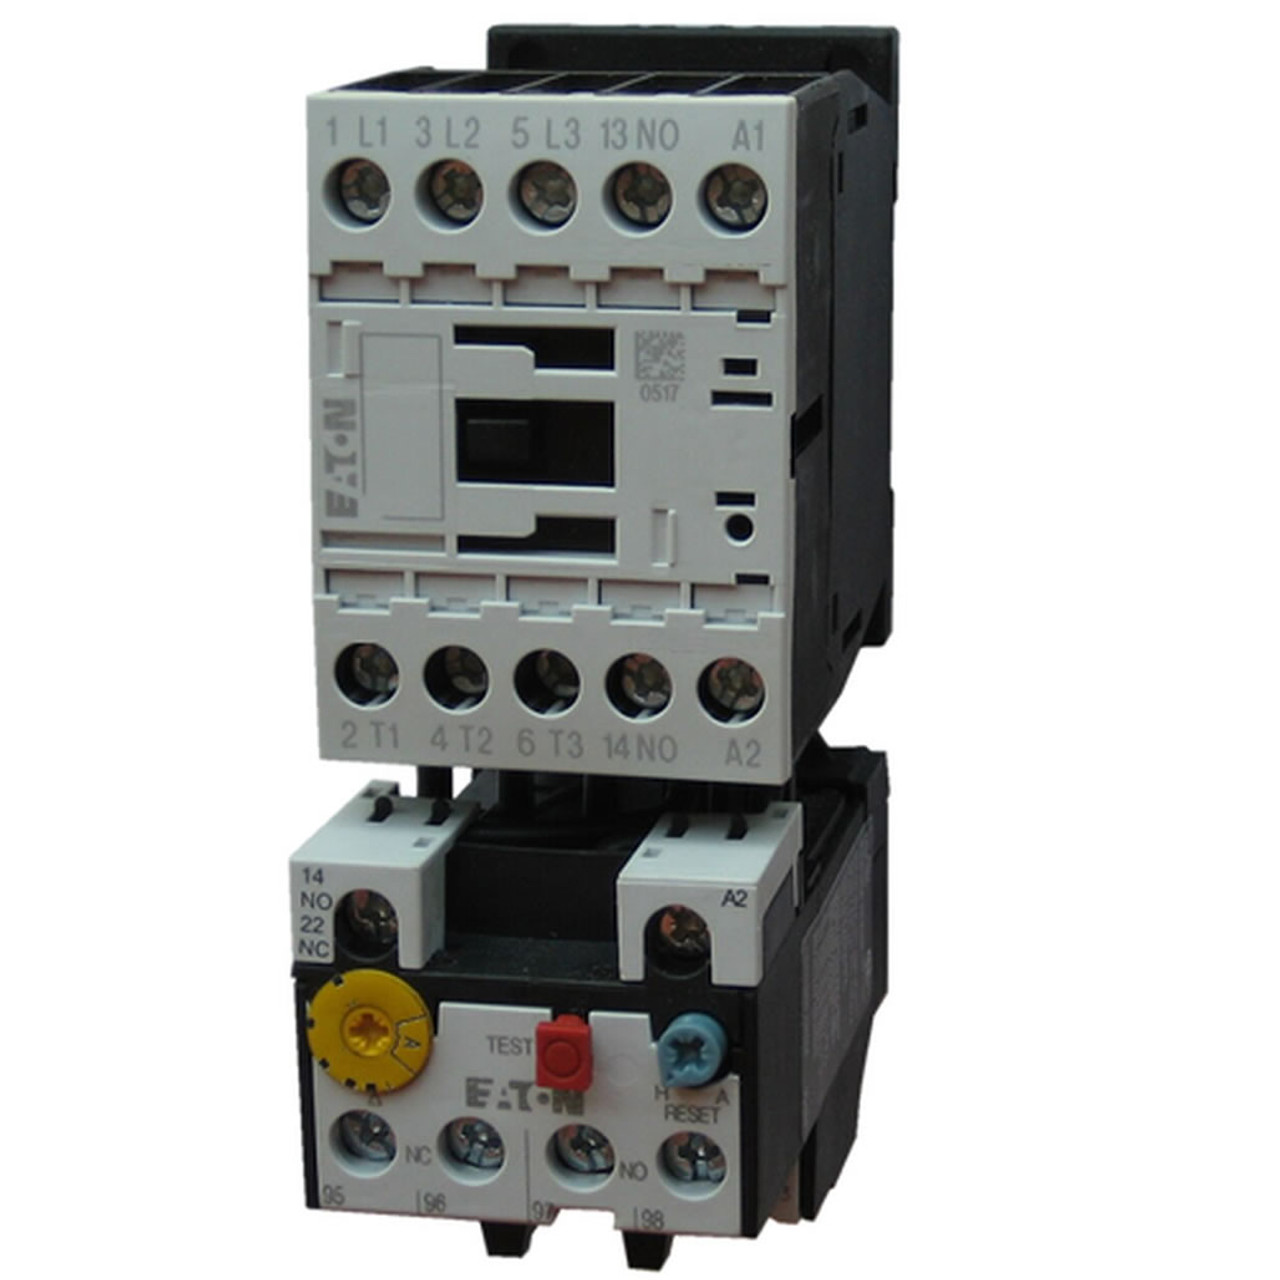 Eaton XTAE007B01A006 full voltage starter